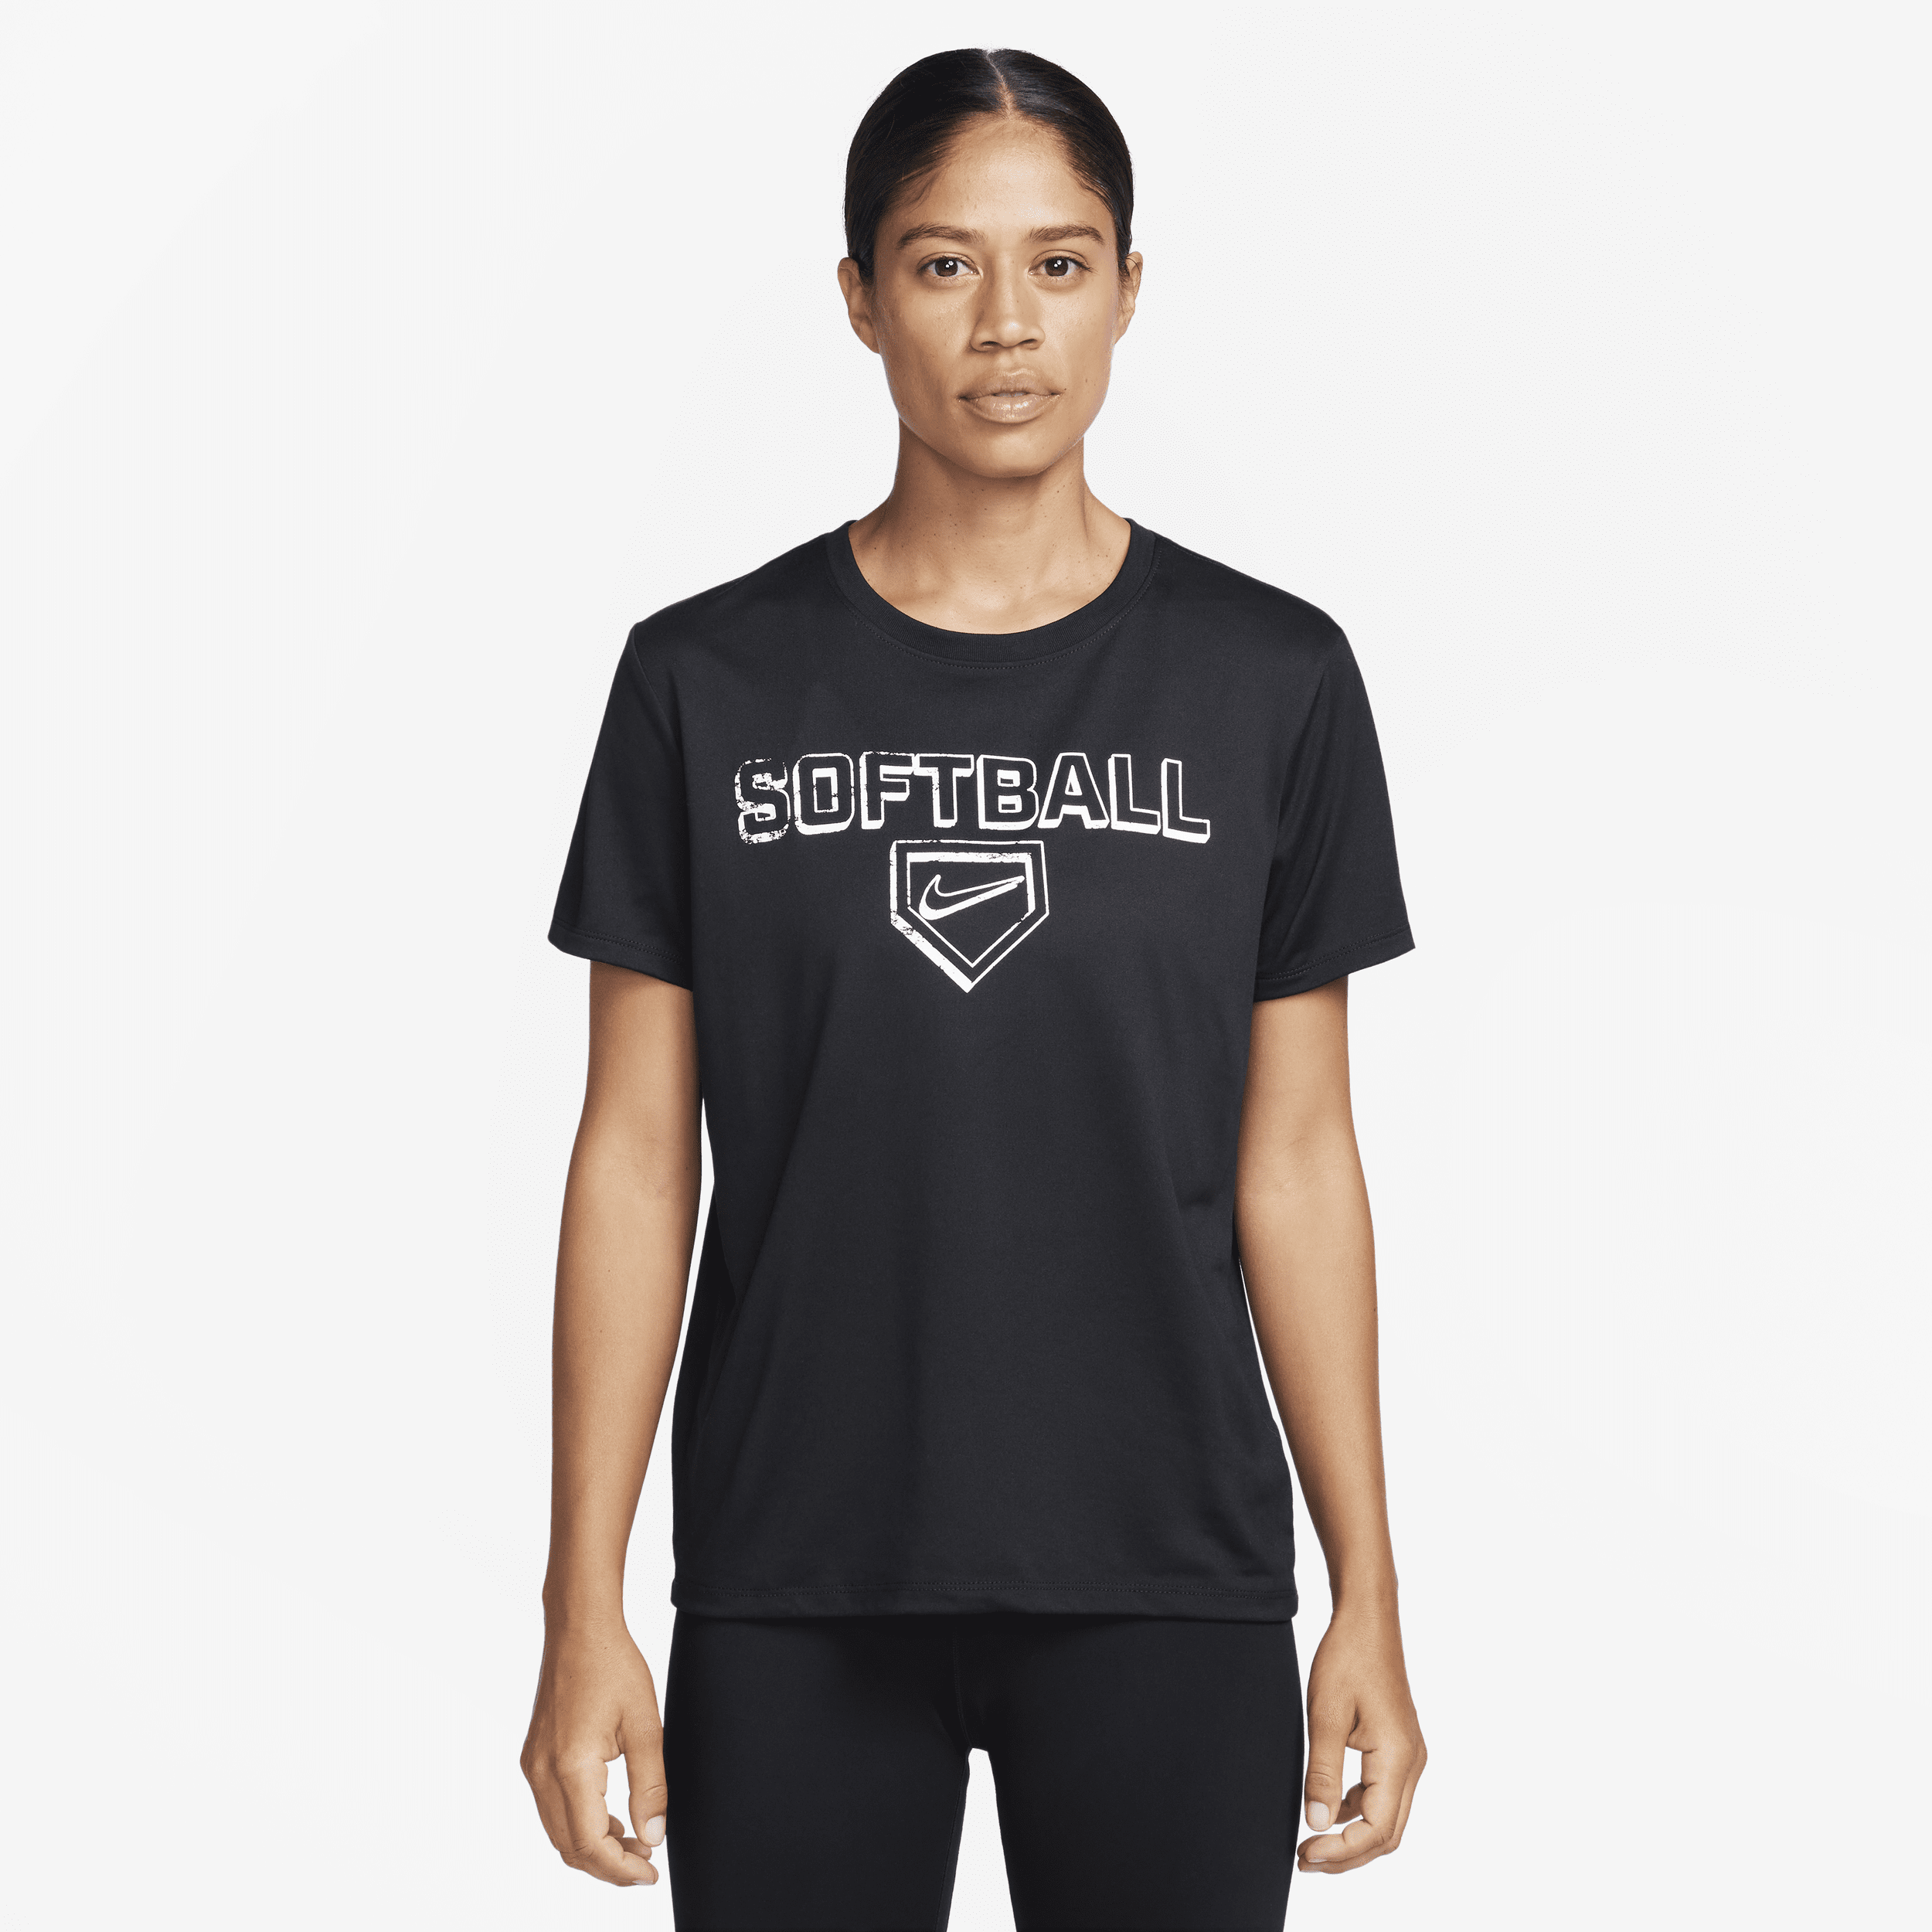 Nike Women's Dri-fit Softball T-shirt In Black